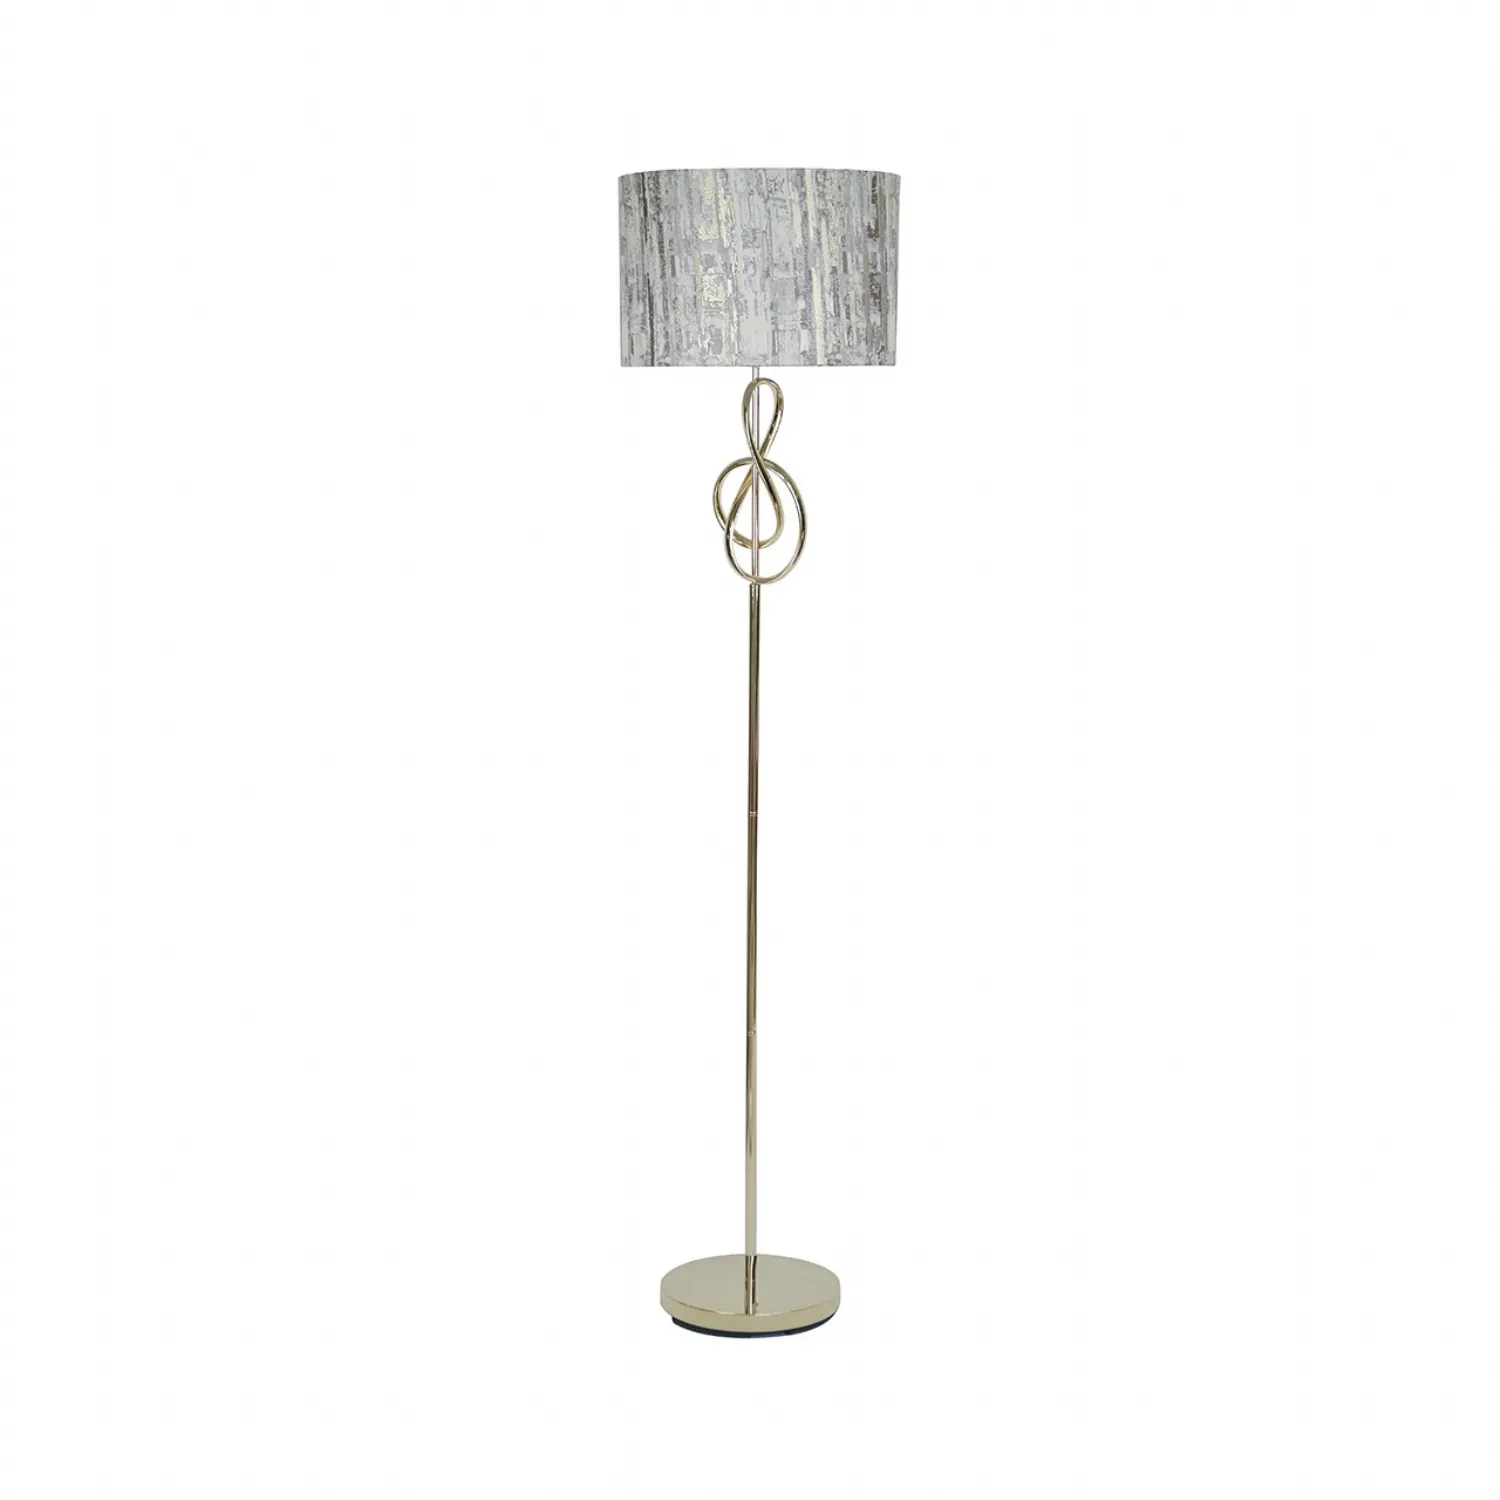 159cm Gold G Clef Design Metal Floor Lamp With Grey Linen Shade